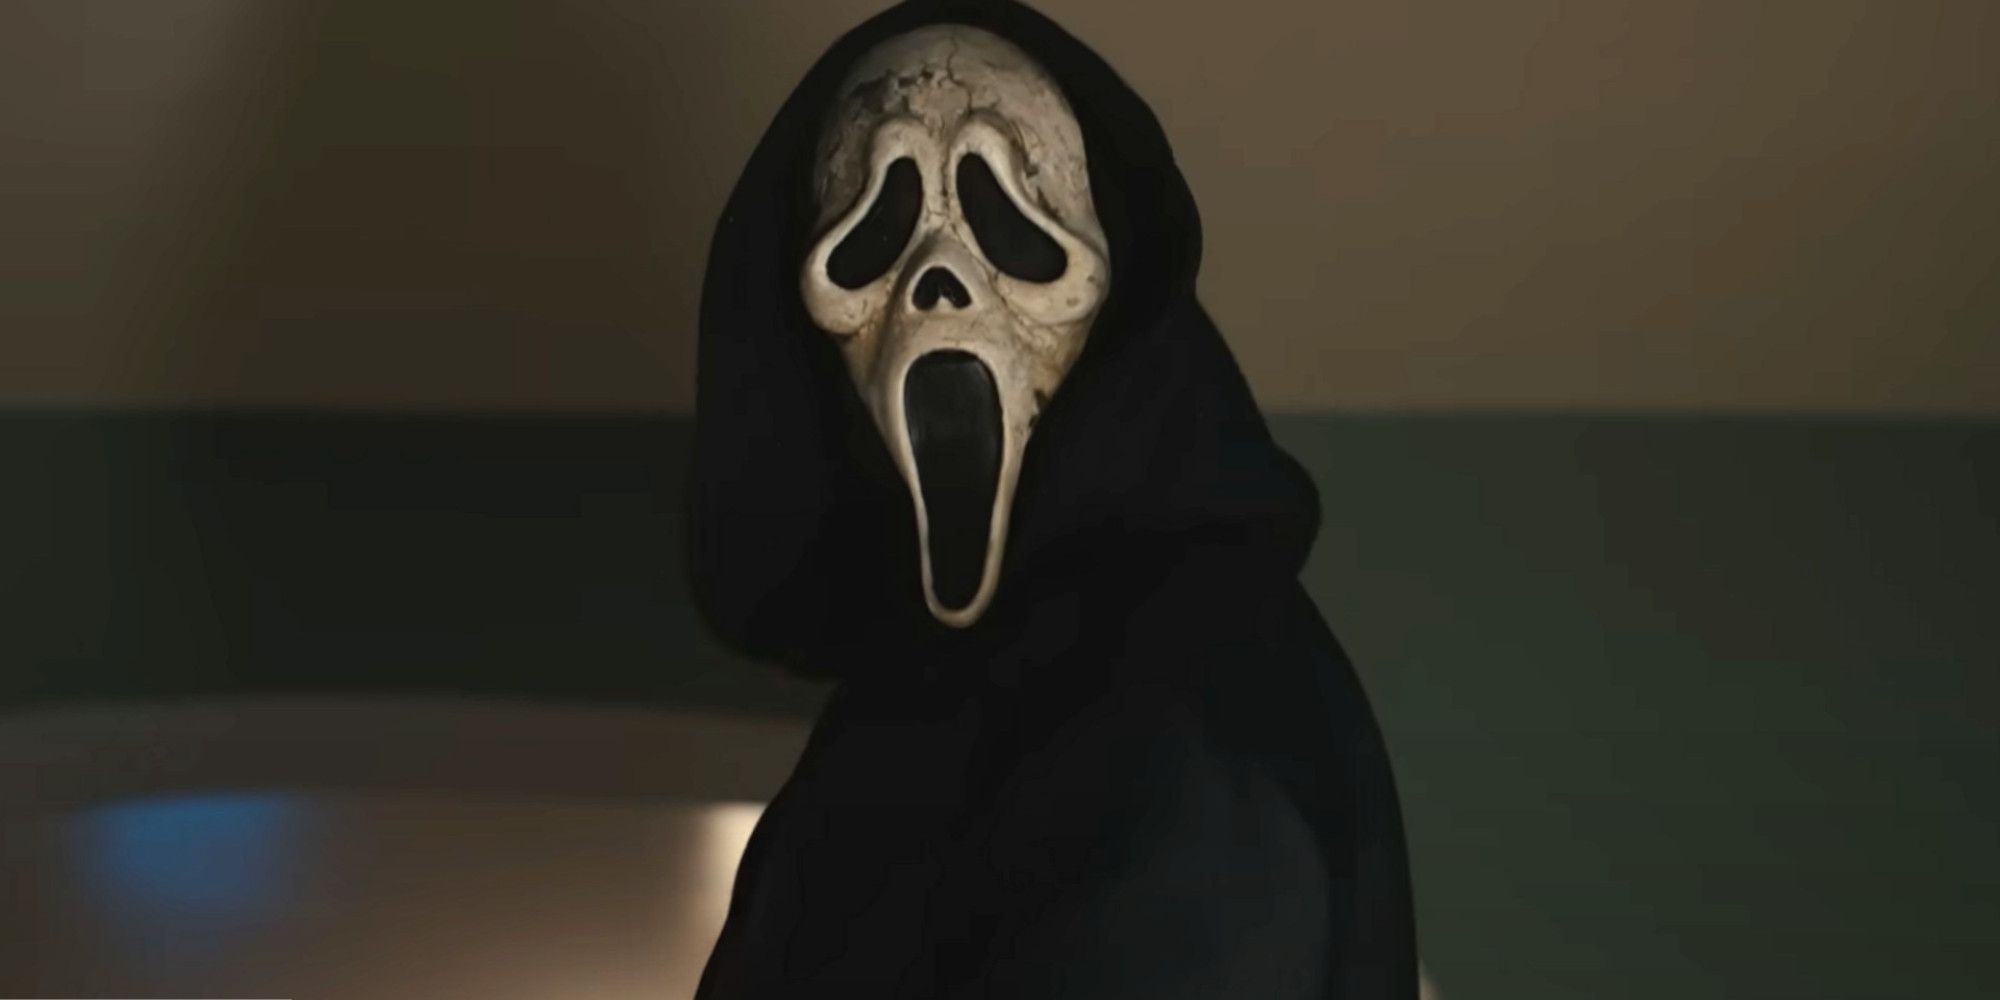 Hey look guys, Scream 6 is on Tubi for free already! 🤣 : r/Scream